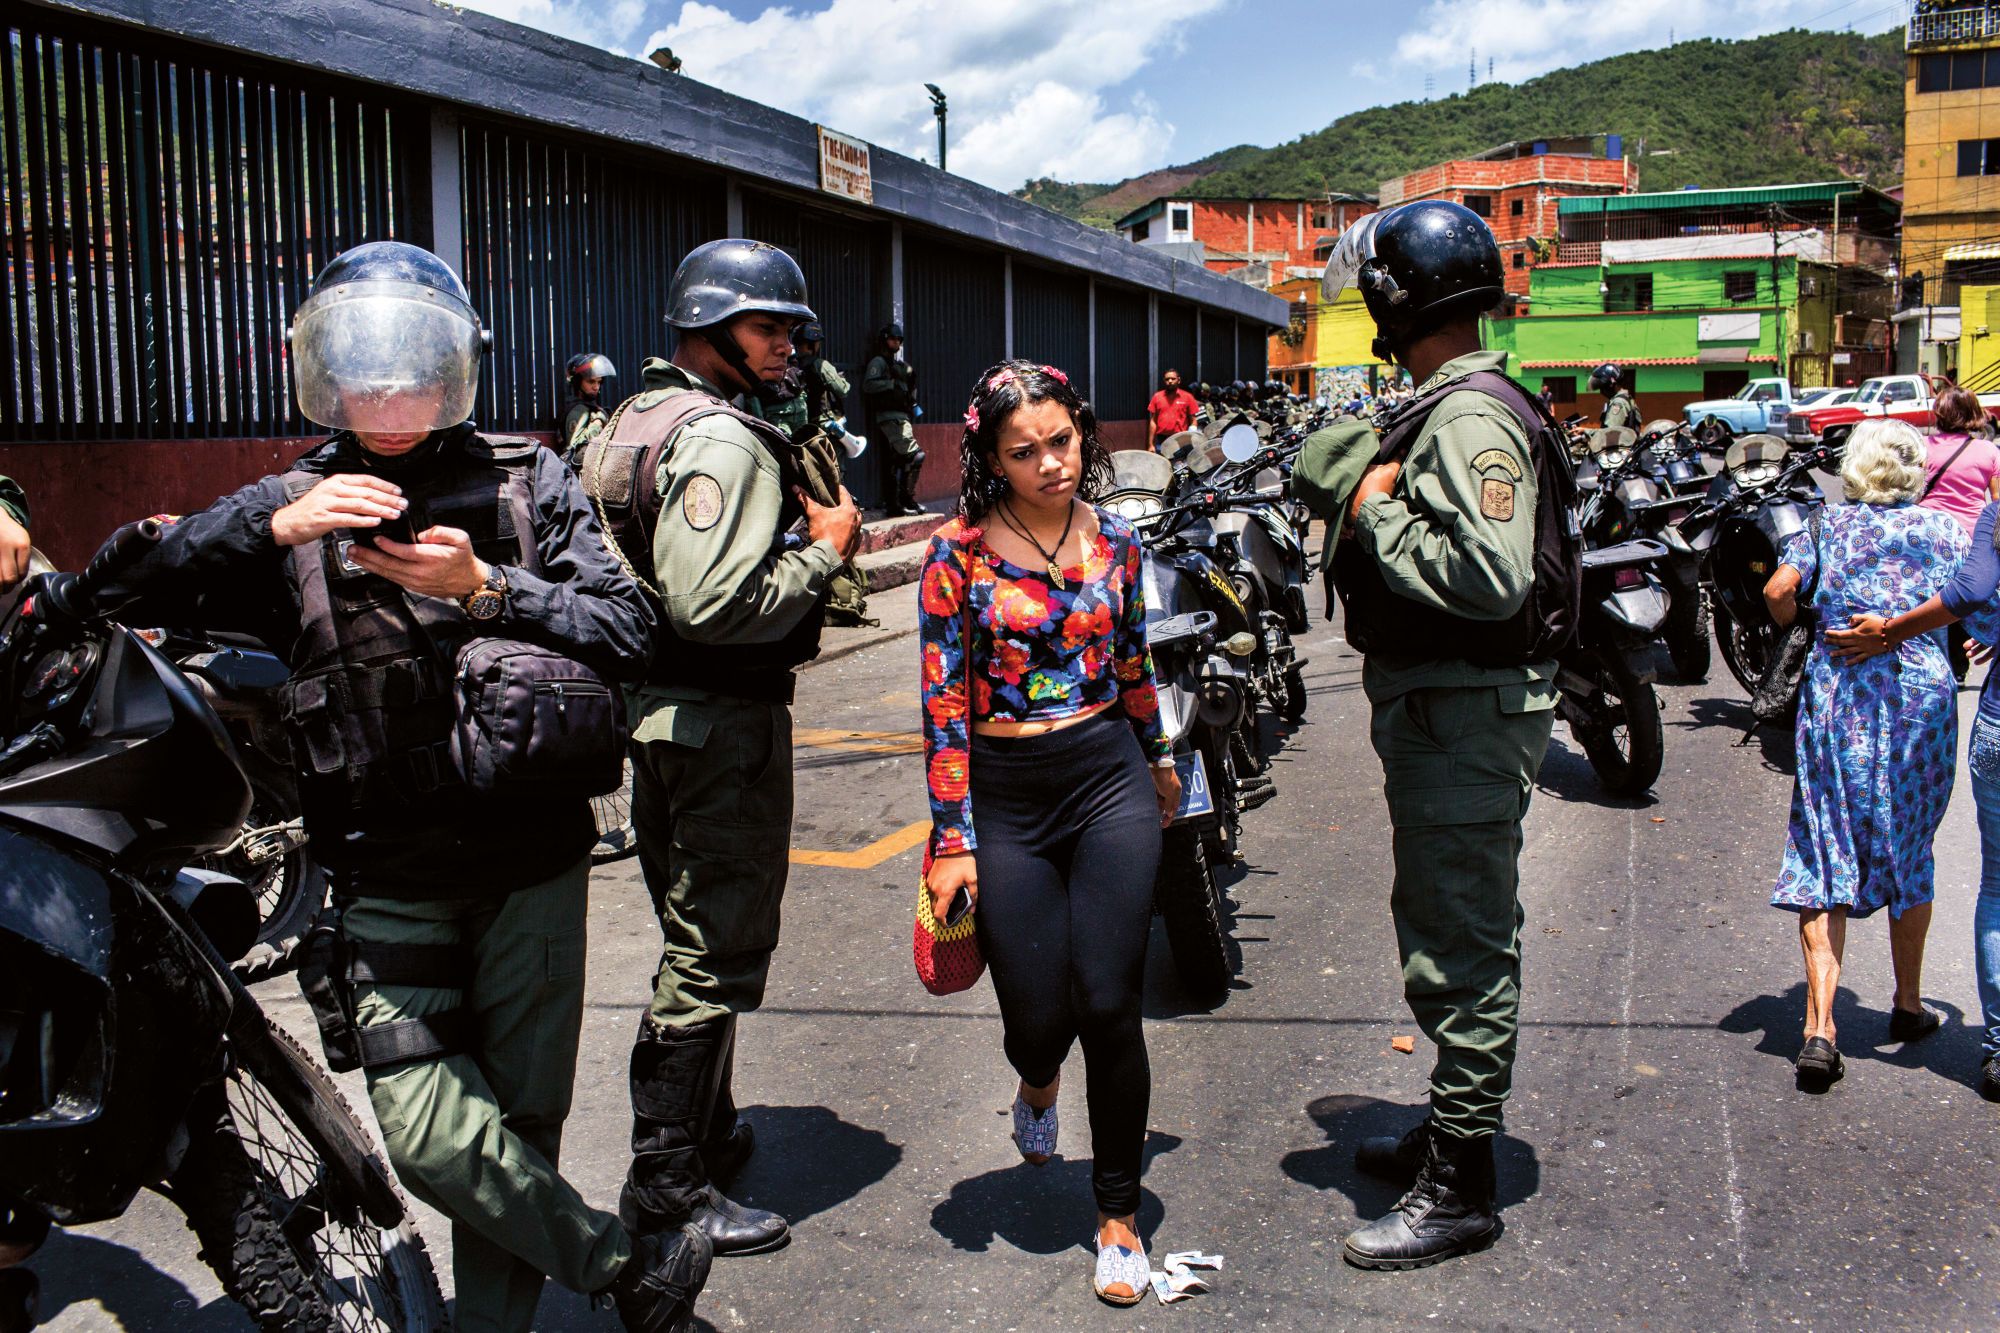 Image by Natalie Keyssar. Venezuela, 2016.